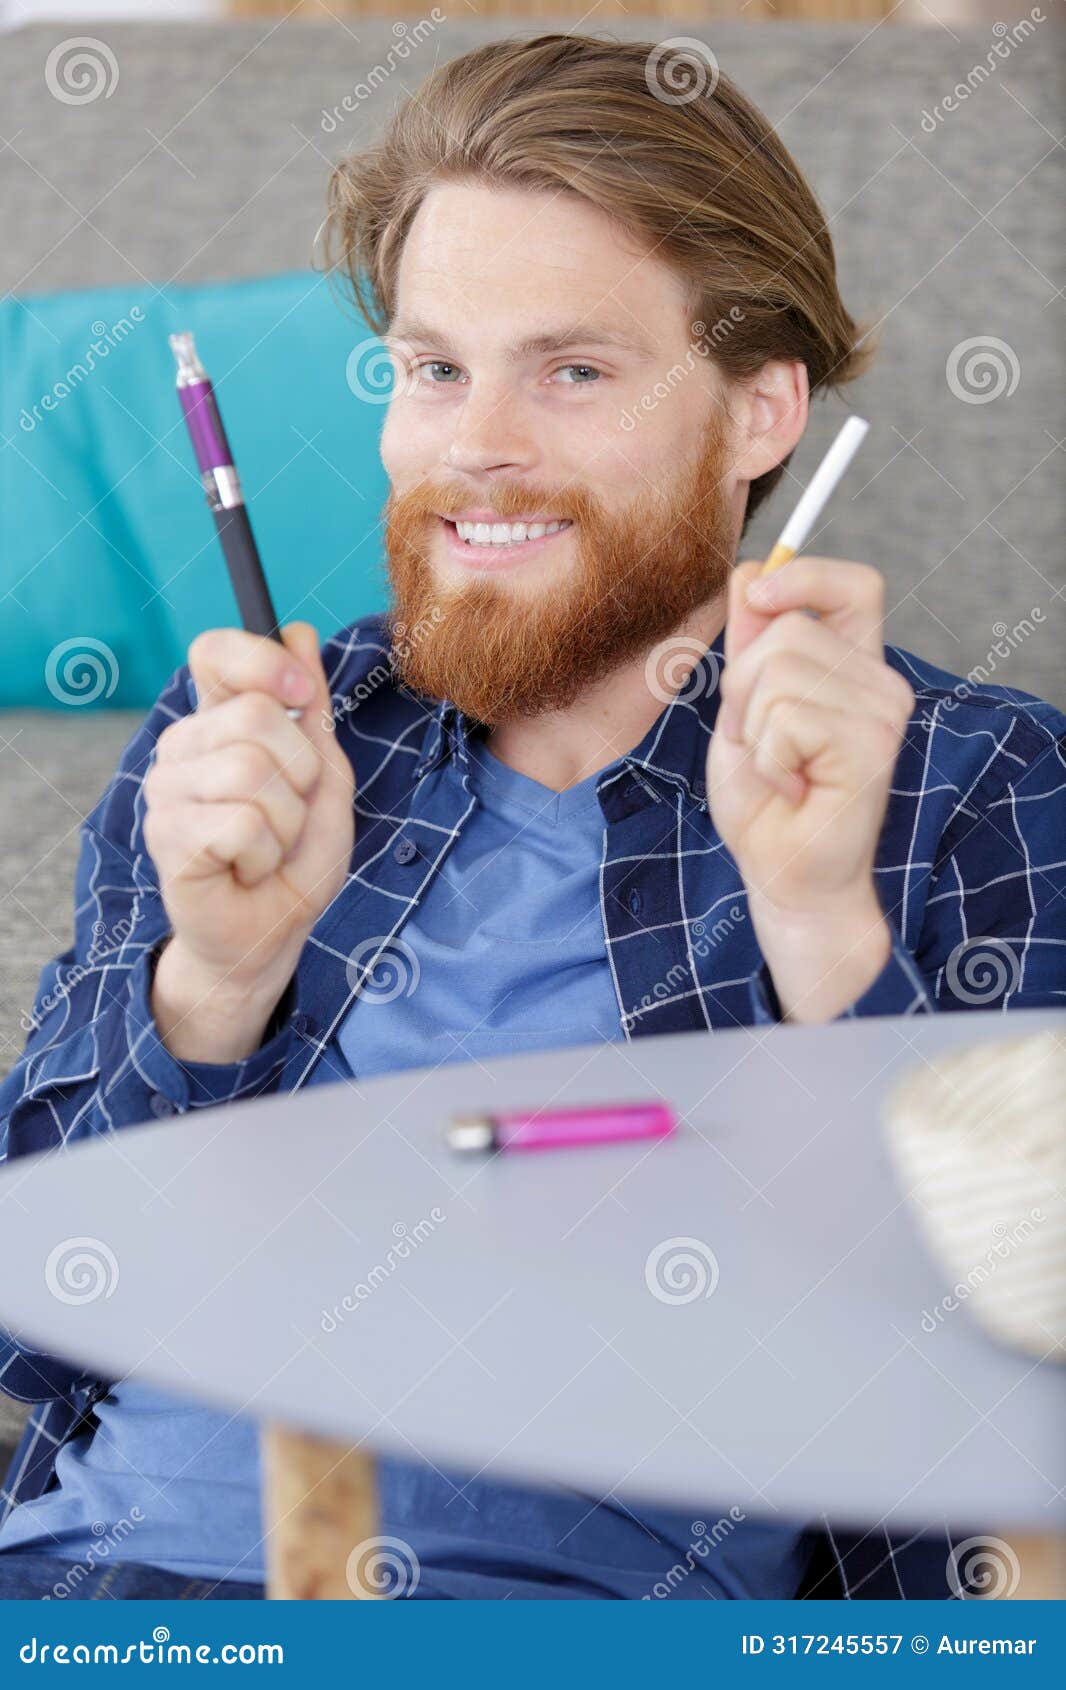 smiling man holding cigarette and vaper